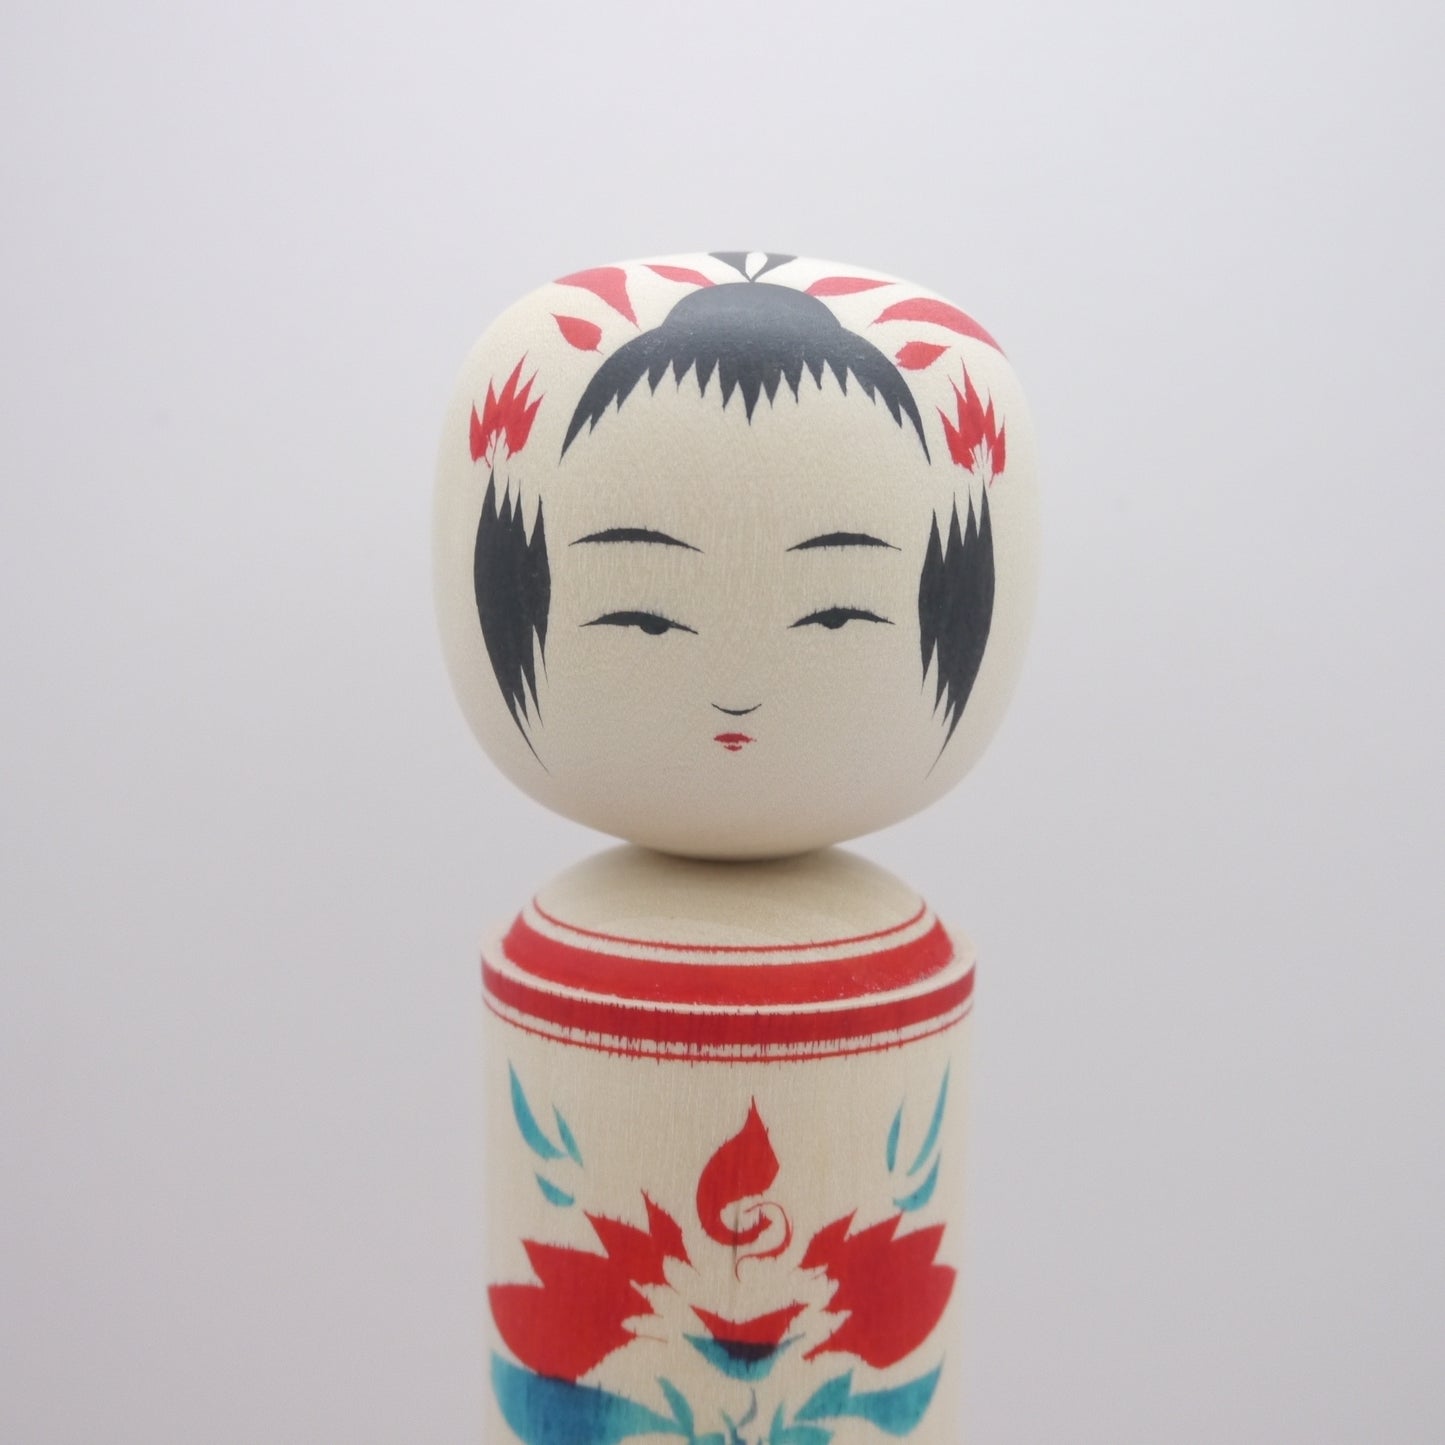 24cm Kokeshi doll by Tomohiro Matsuda